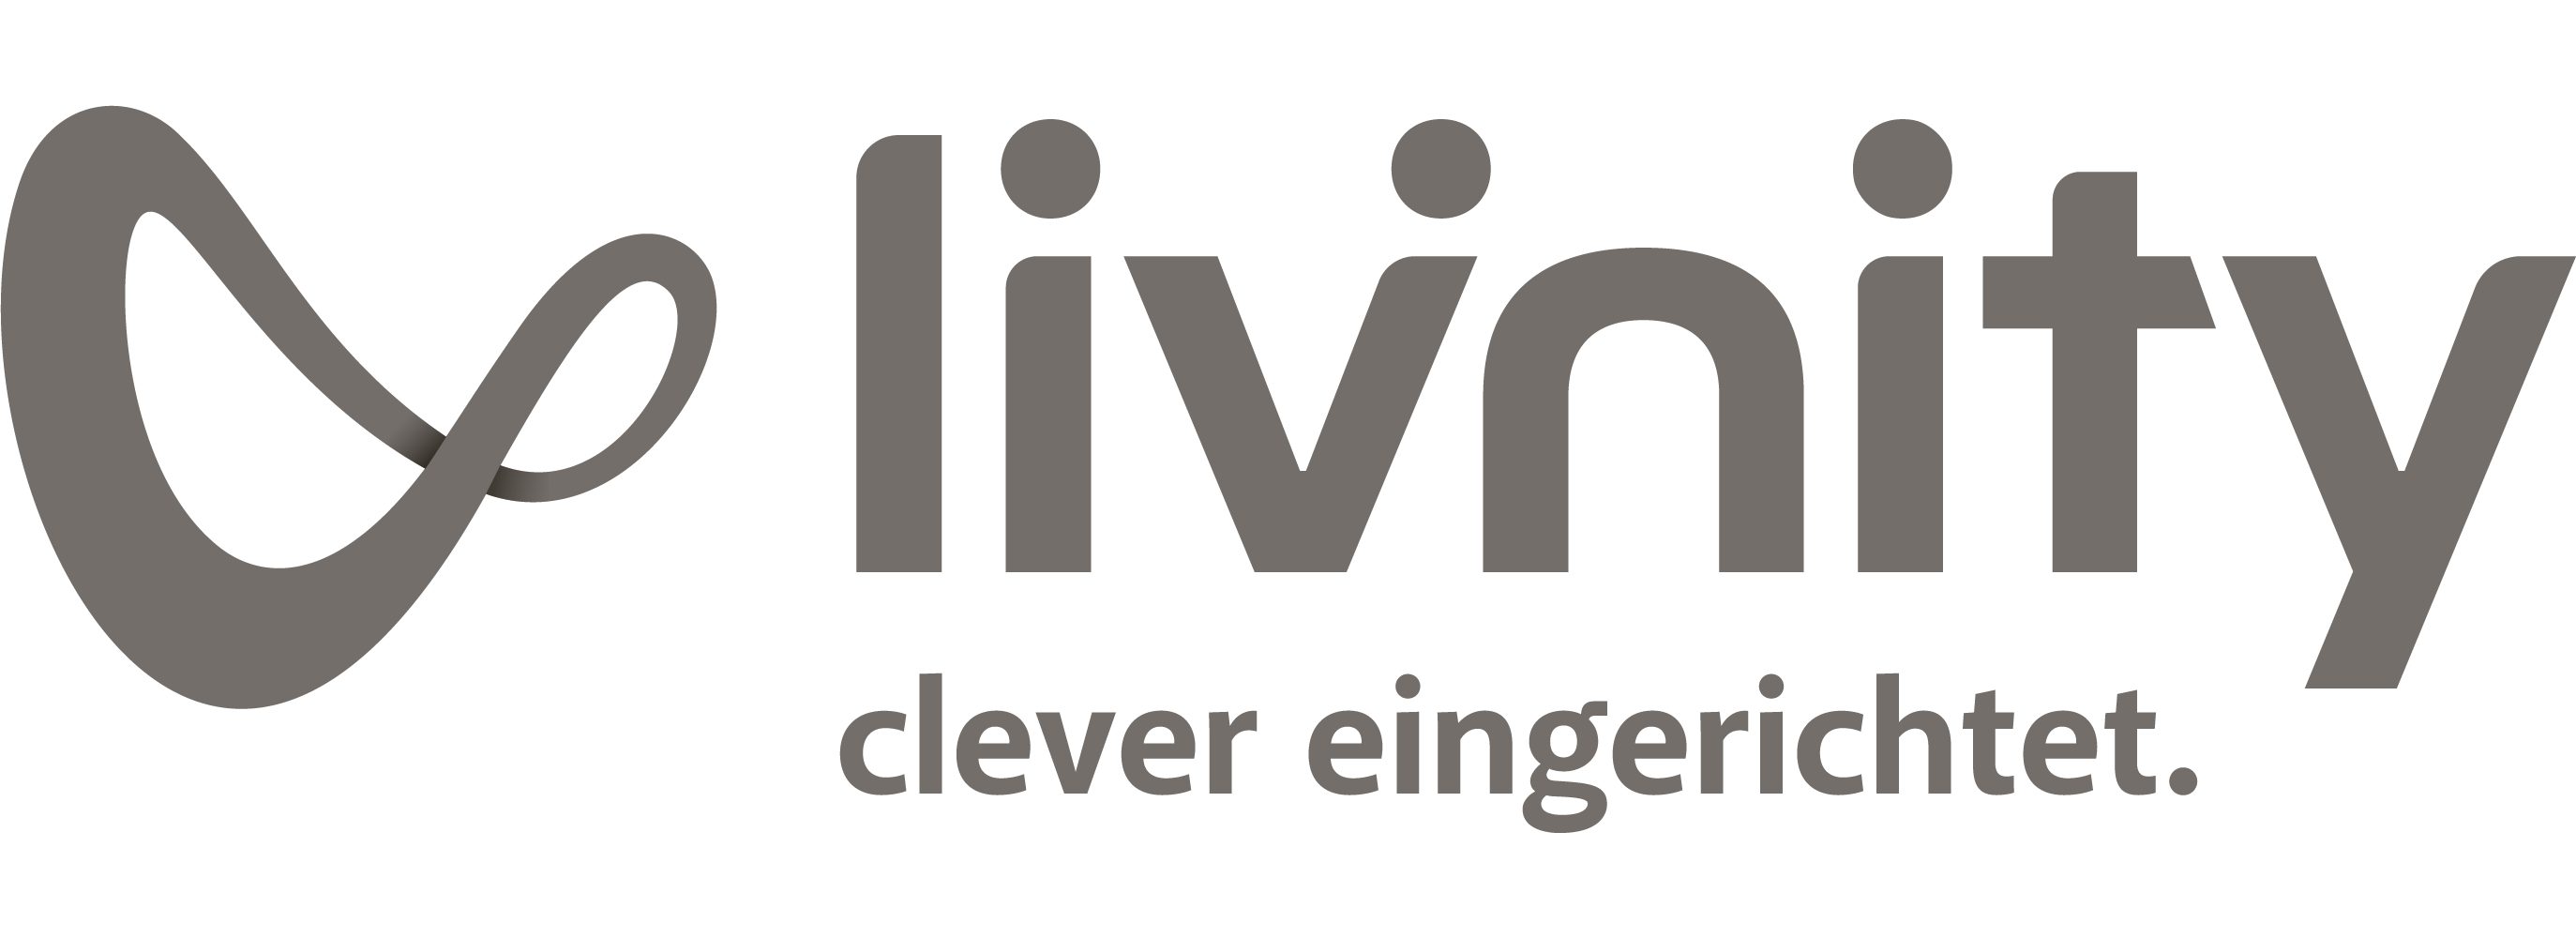 Livinity®